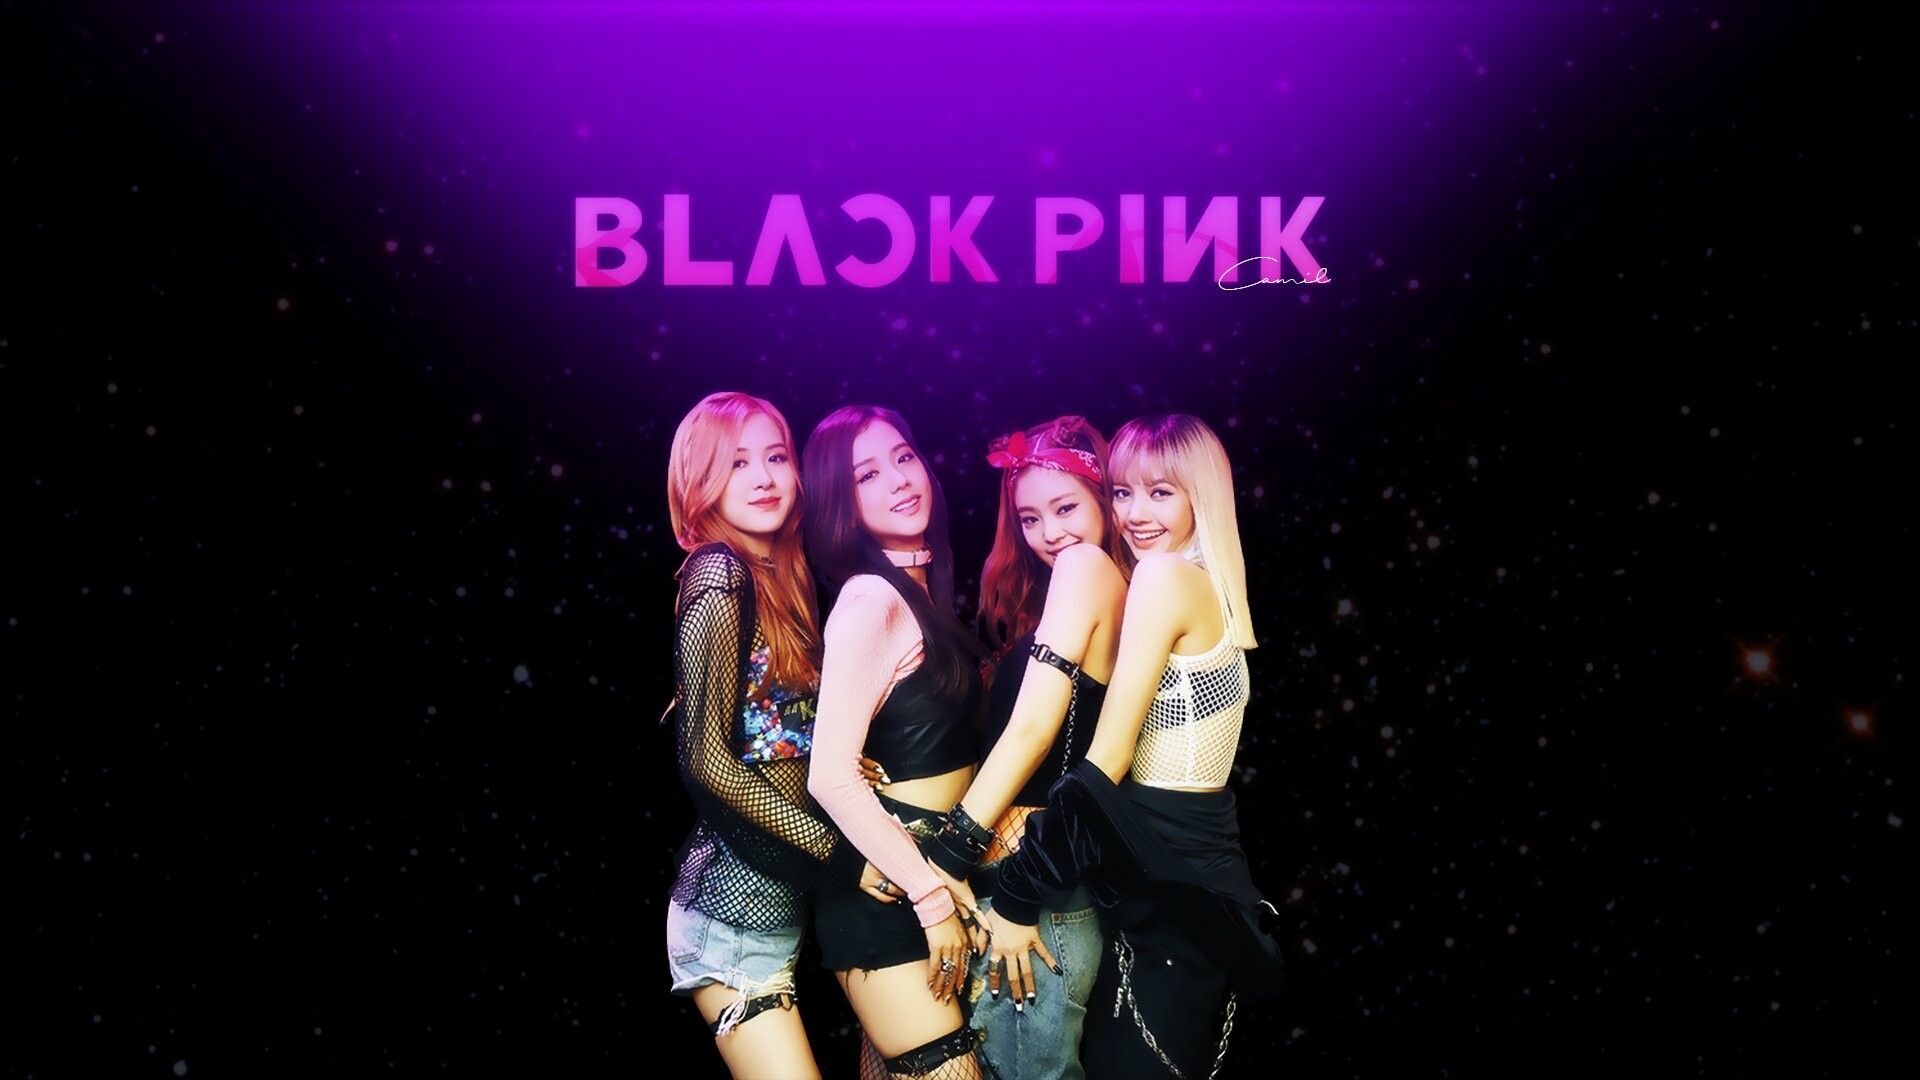 BLACKPINK: The first Korean girl group to win the MTV Music Video Award. 1920x1080 Full HD Wallpaper.